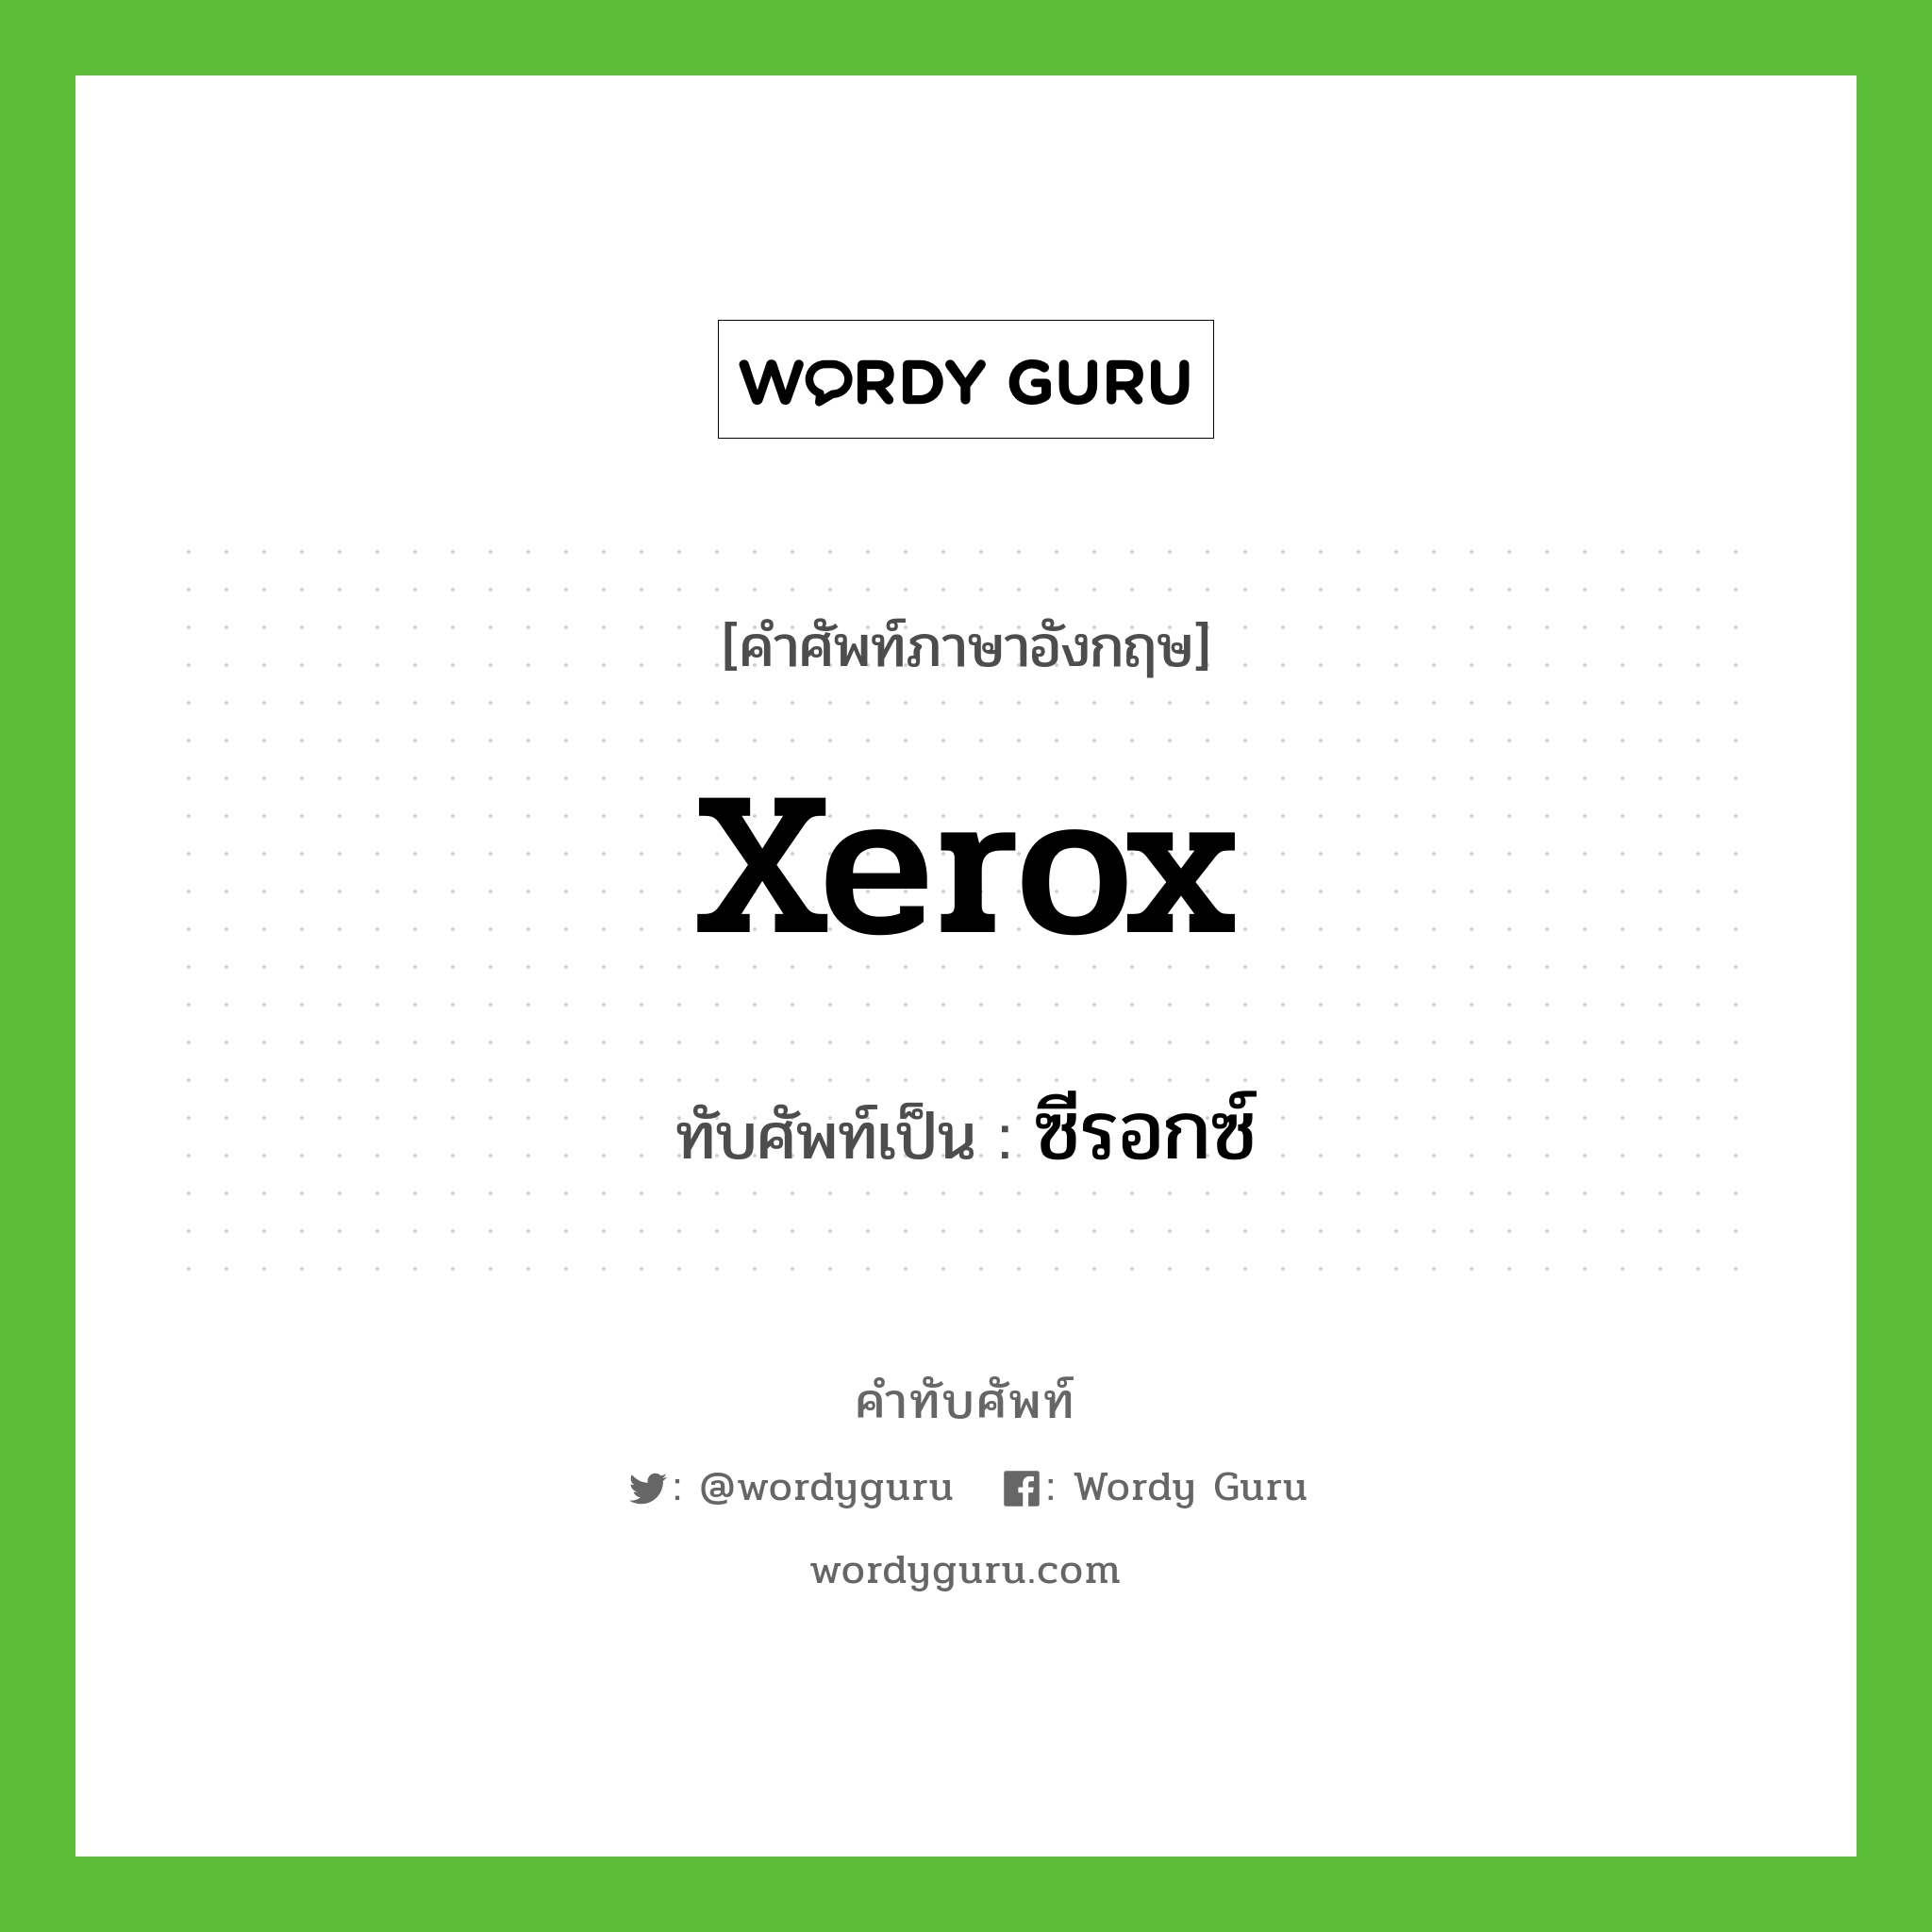 Xerox เขียนเป็นคำไทยว่าอะไร?, คำศัพท์ภาษาอังกฤษ Xerox ทับศัพท์เป็น ซีรอกซ์